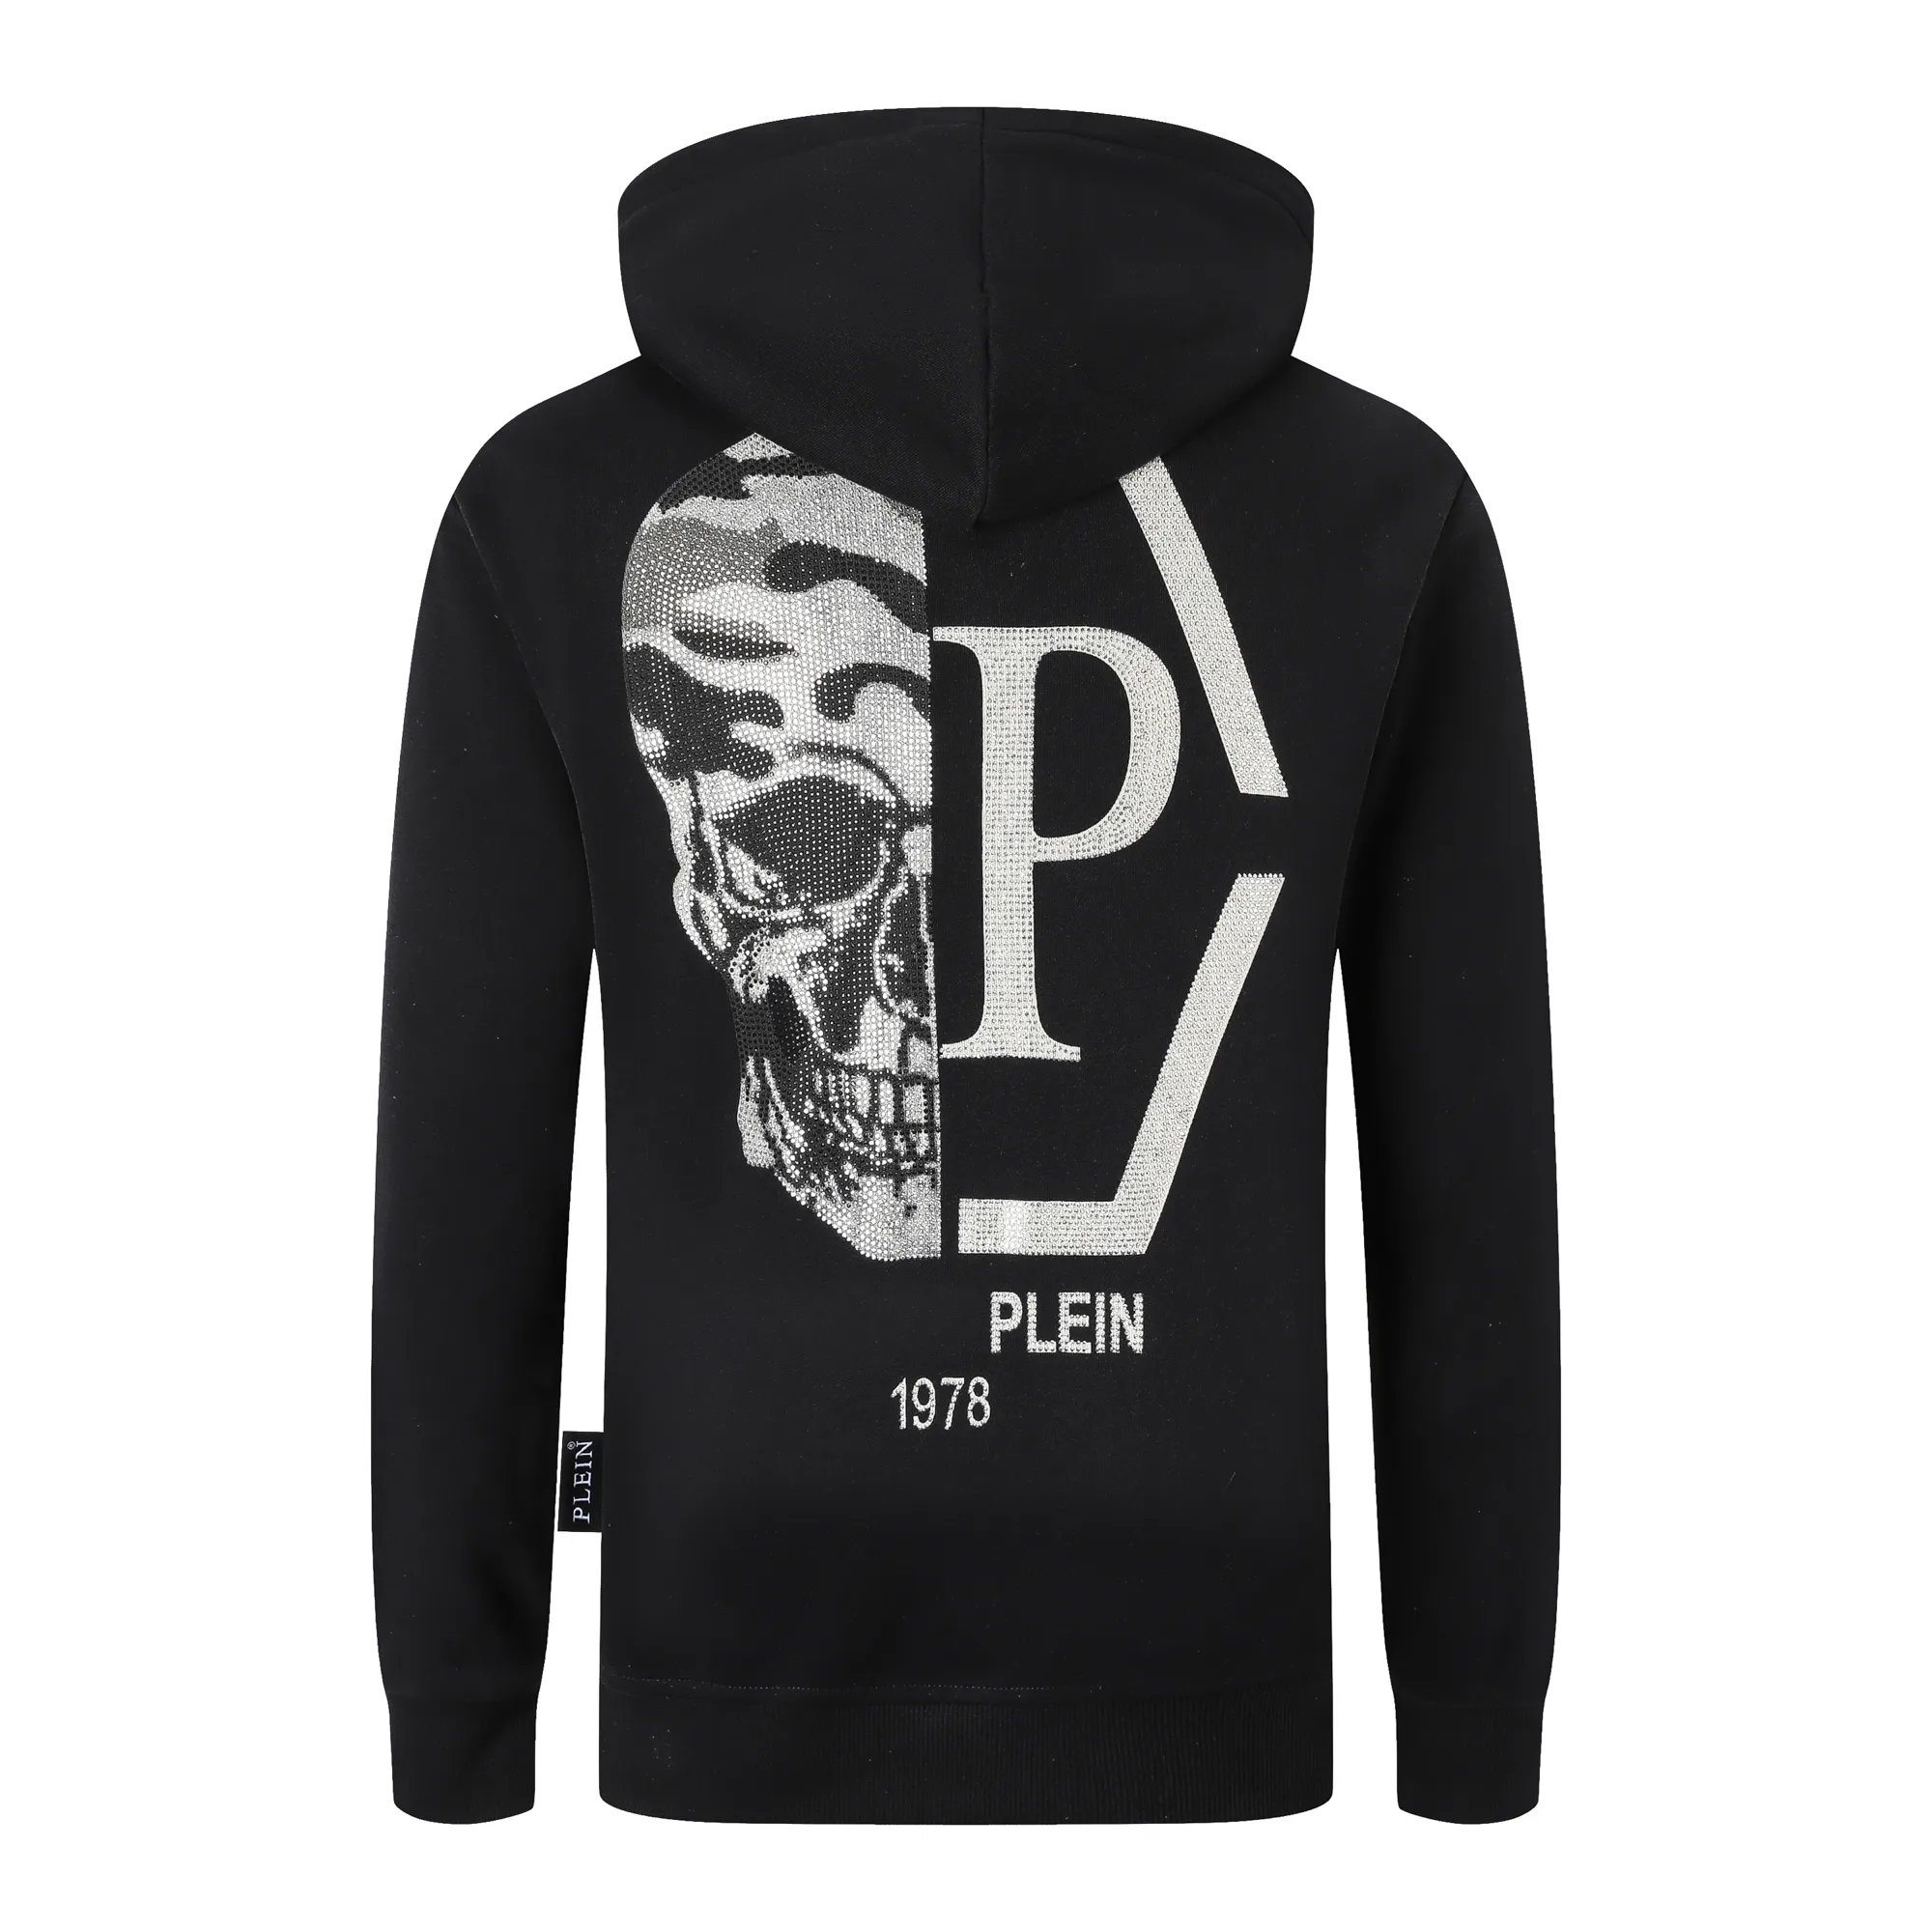 Plein Bear Brand Hoodies Sweatshirts دافئة سميكة من النوع الثقيل هيب هوب الشخصية المميزة PP Skull Pullover Rhinestone Hoodie للرجال 2087